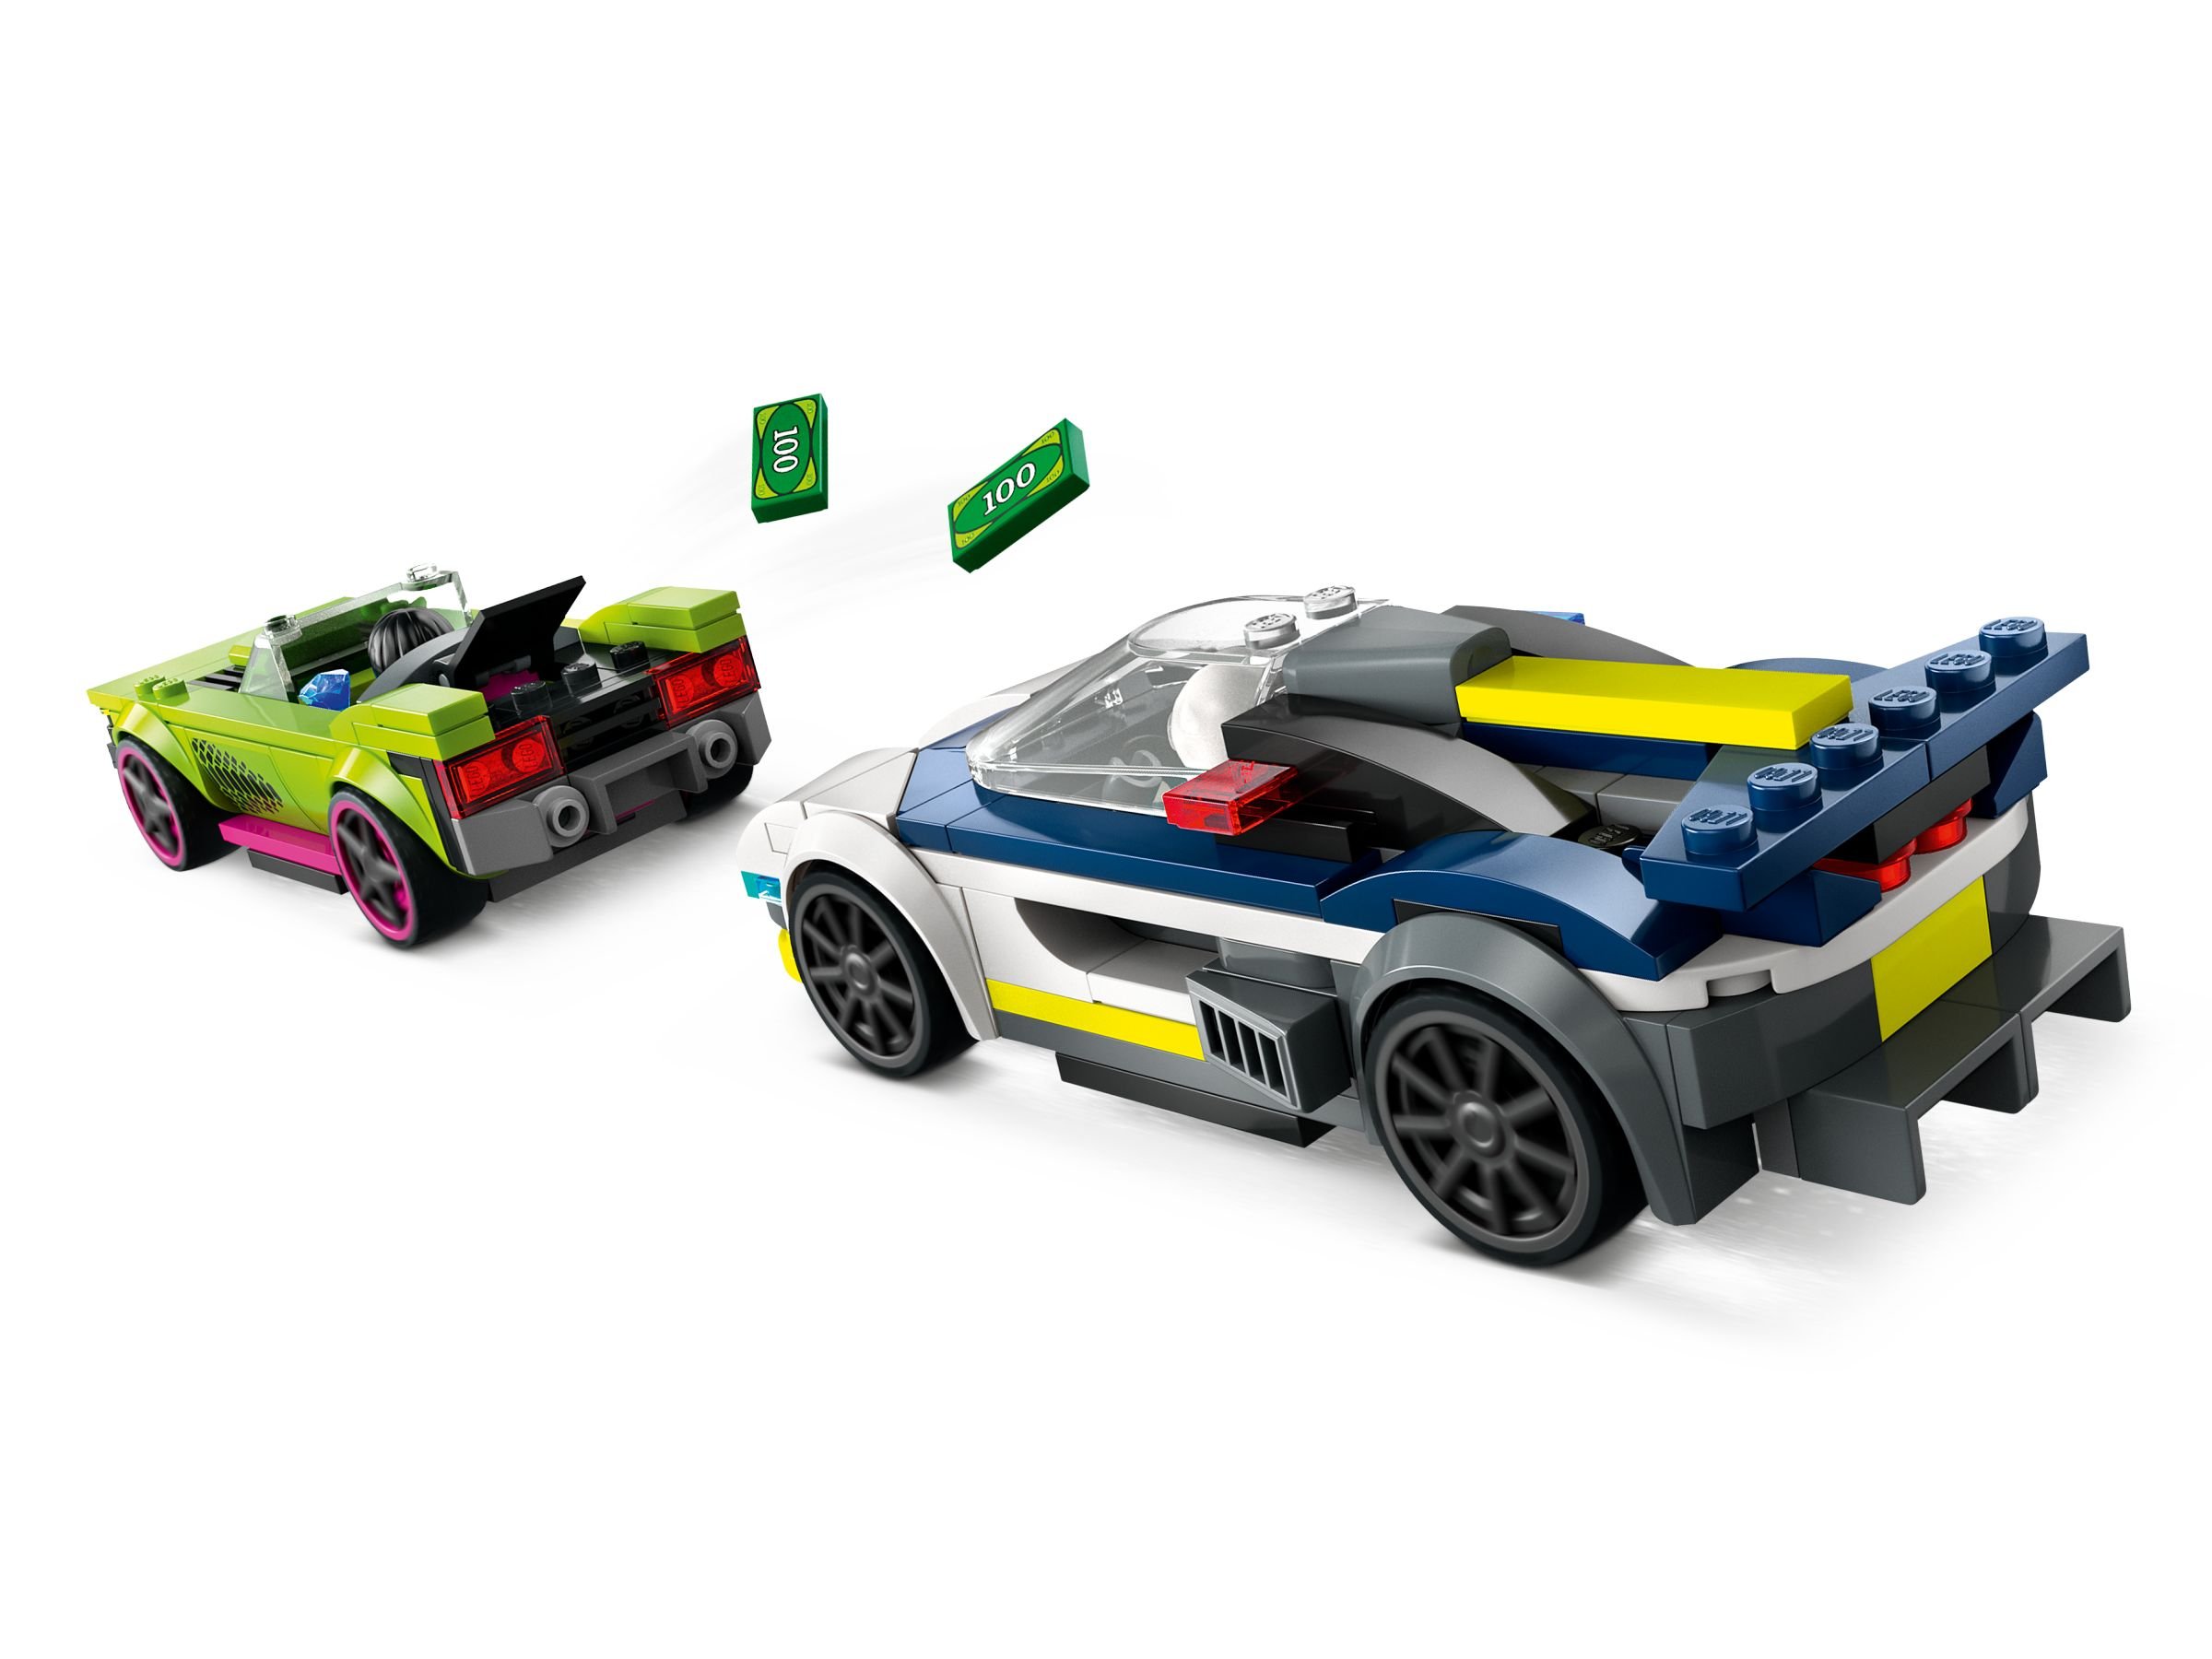 LEGO City 60415 Verfolgungsjagd mit Polizeiauto und Muscle Car LEGO_60415_alt2.jpg